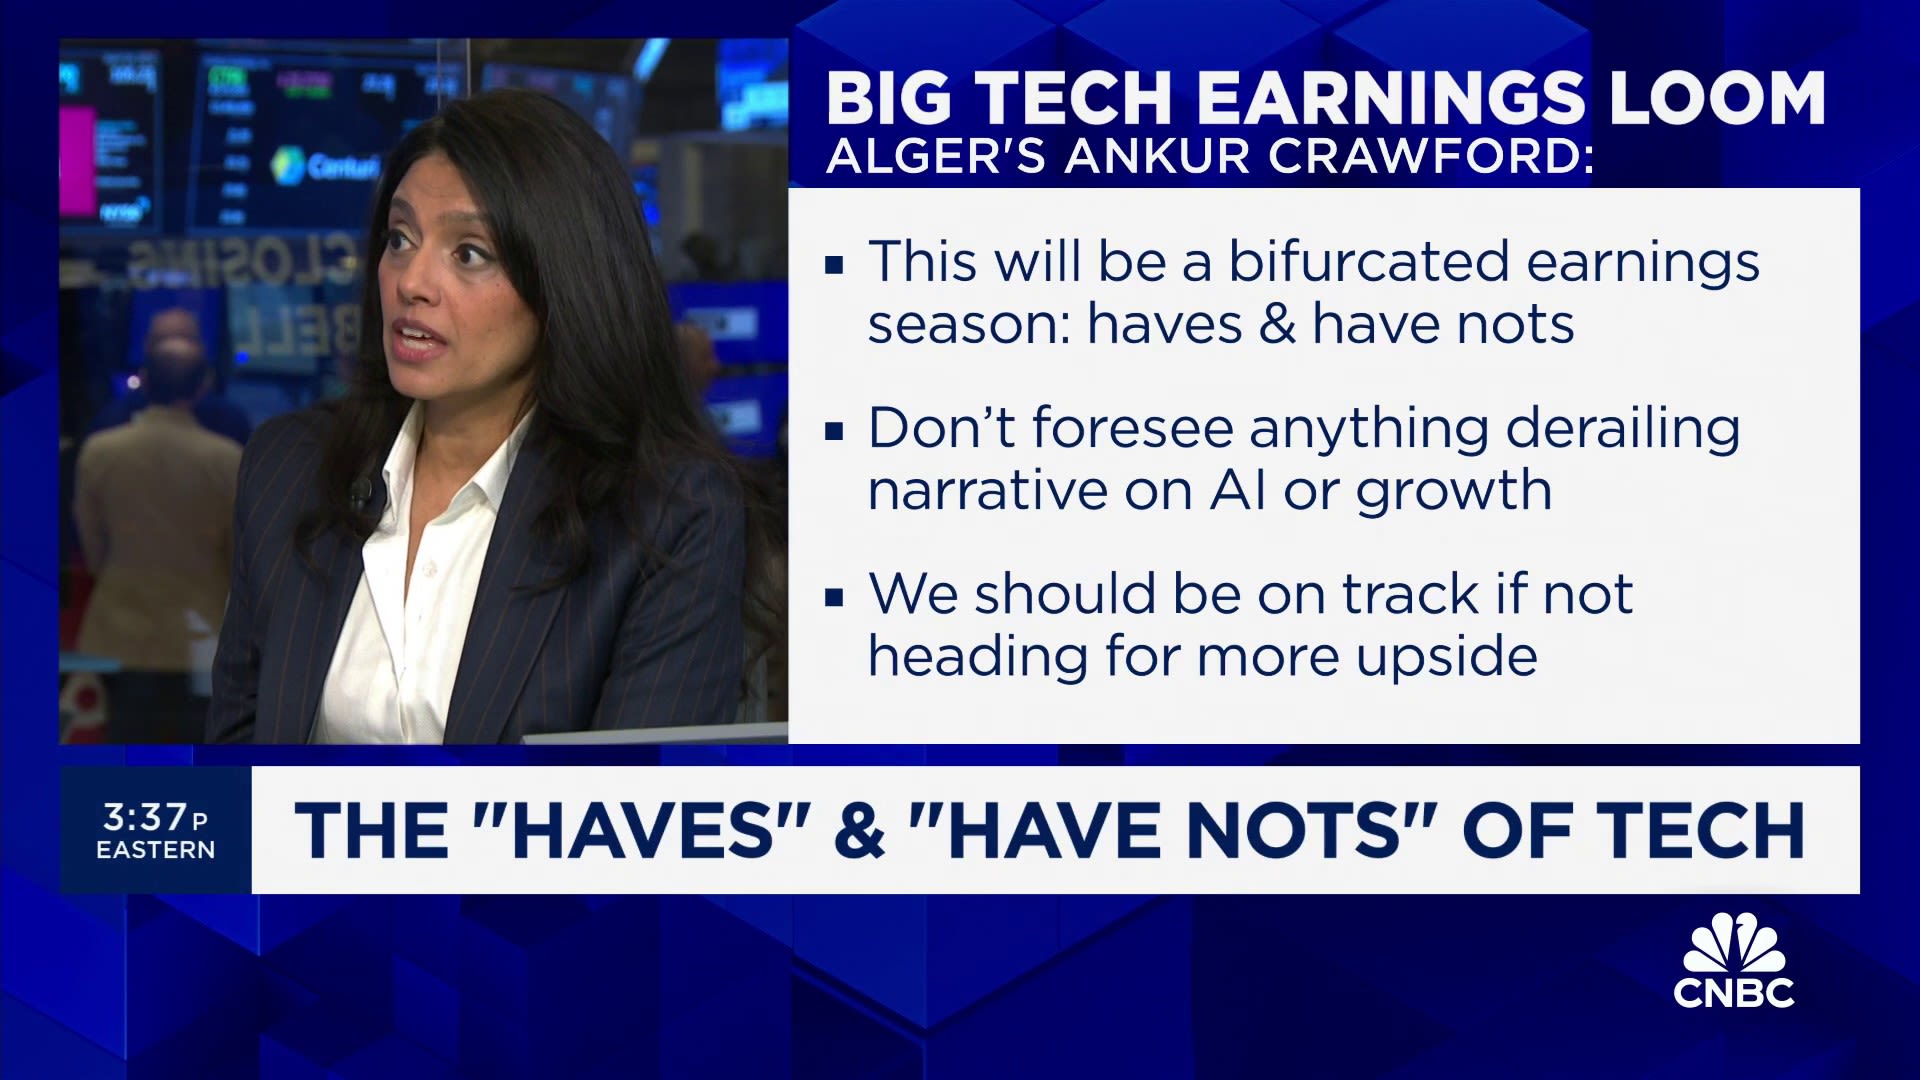 Big tech earnings will be bifurcated, says Alger's Ankur Crawford